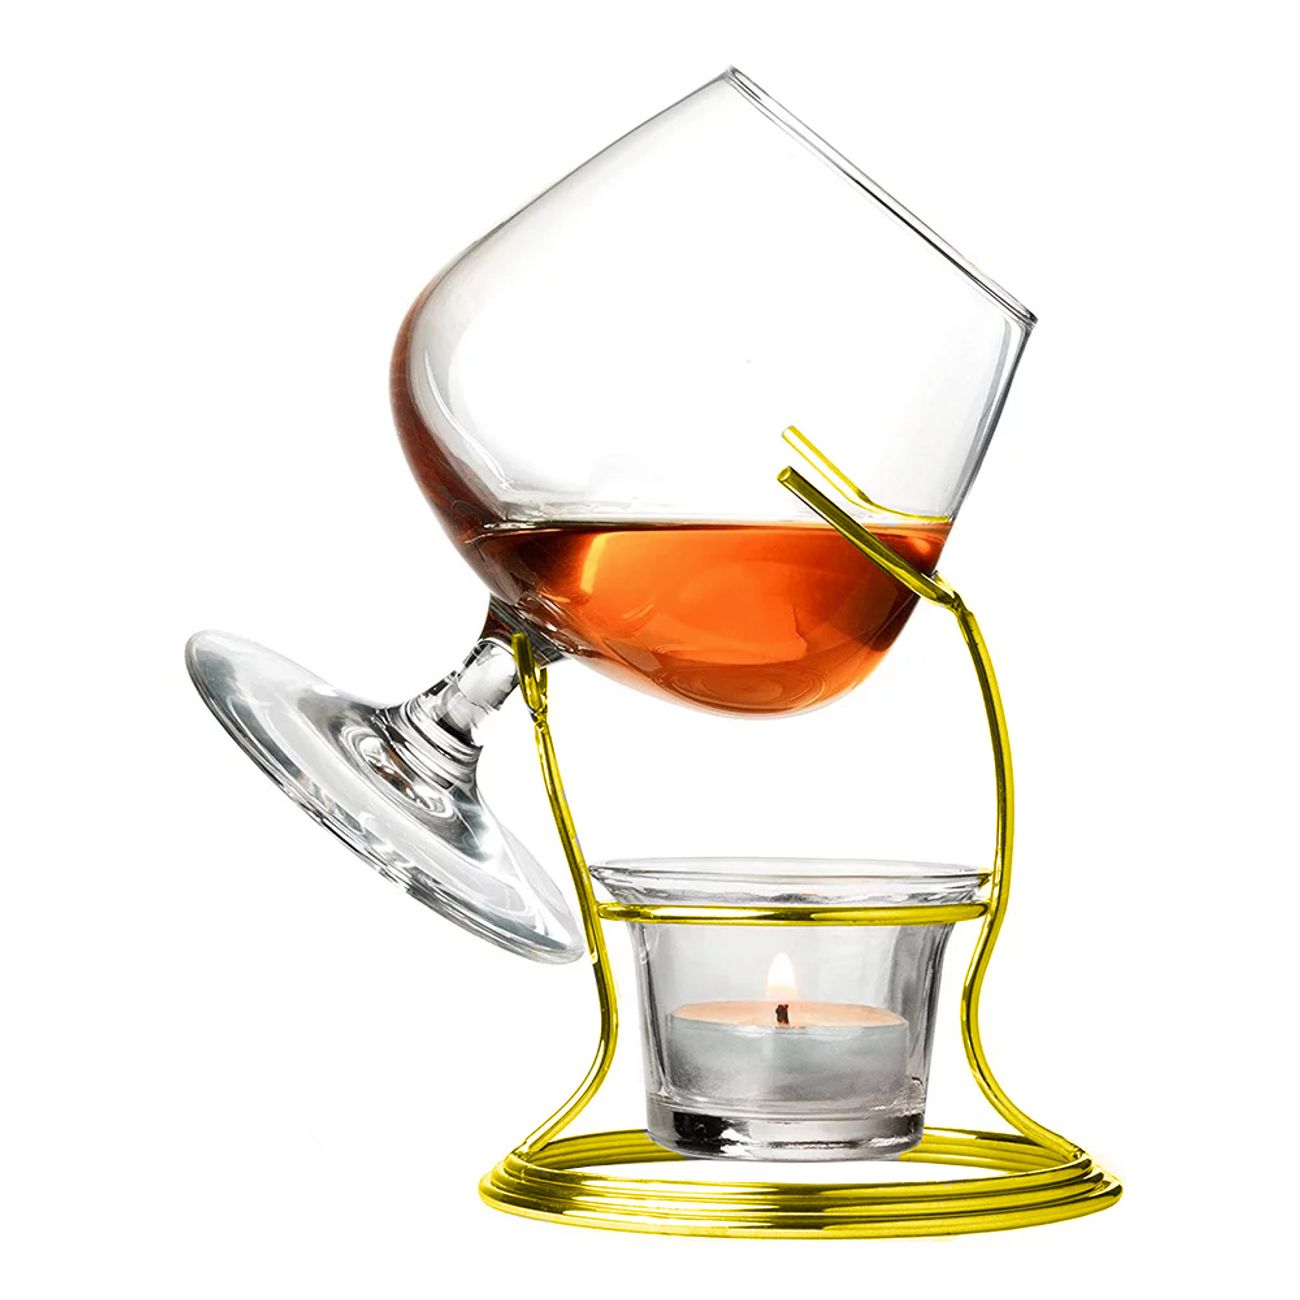 vinology-brandy-varmare-2